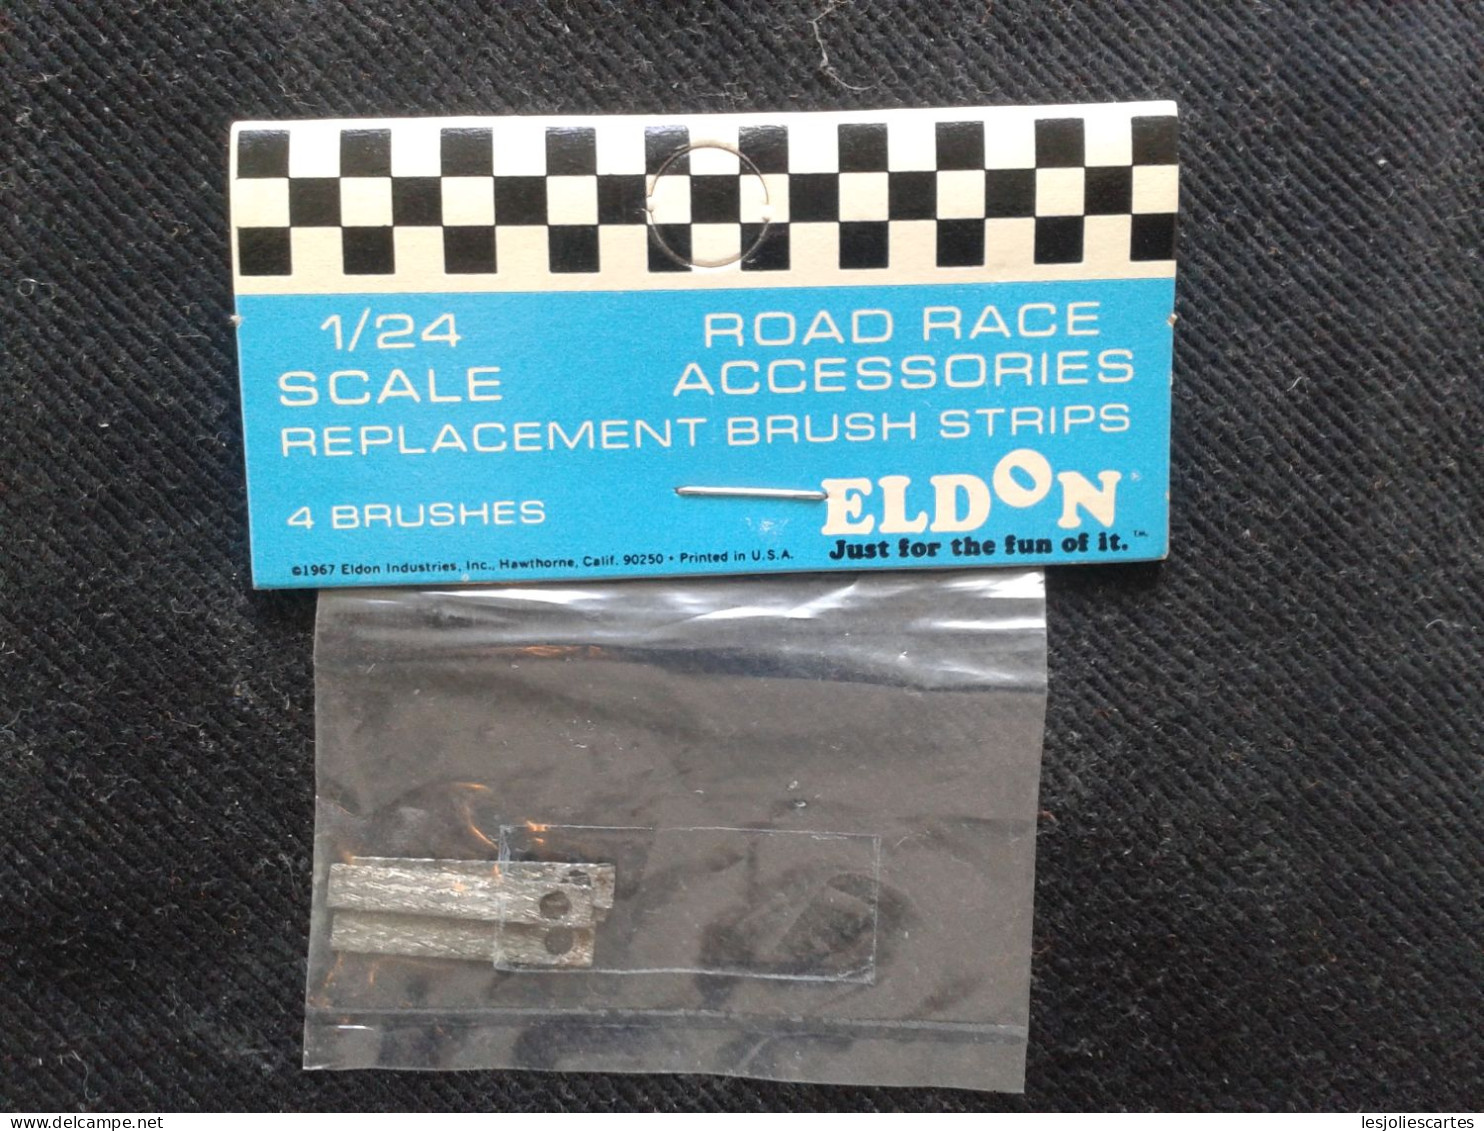 Eldon Replacement Brush Strips Road Race Accessories 1/24 - Autocircuits